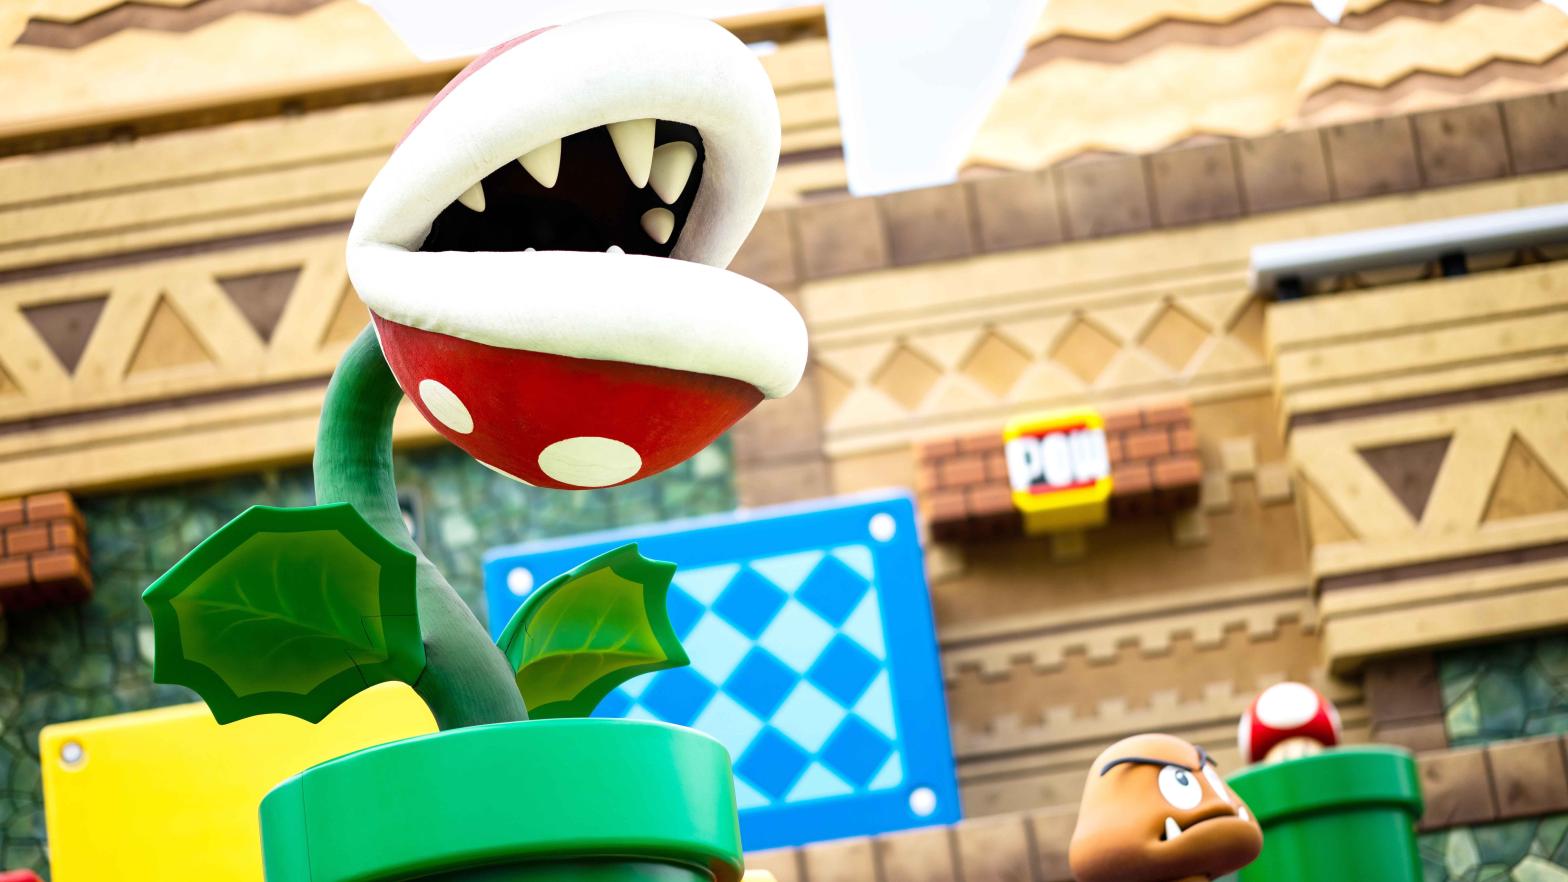 Piranha plans? Pow blocks? This is Mario alright. (Image: Hamilton Pytluk/Universal Studios Hollywood)